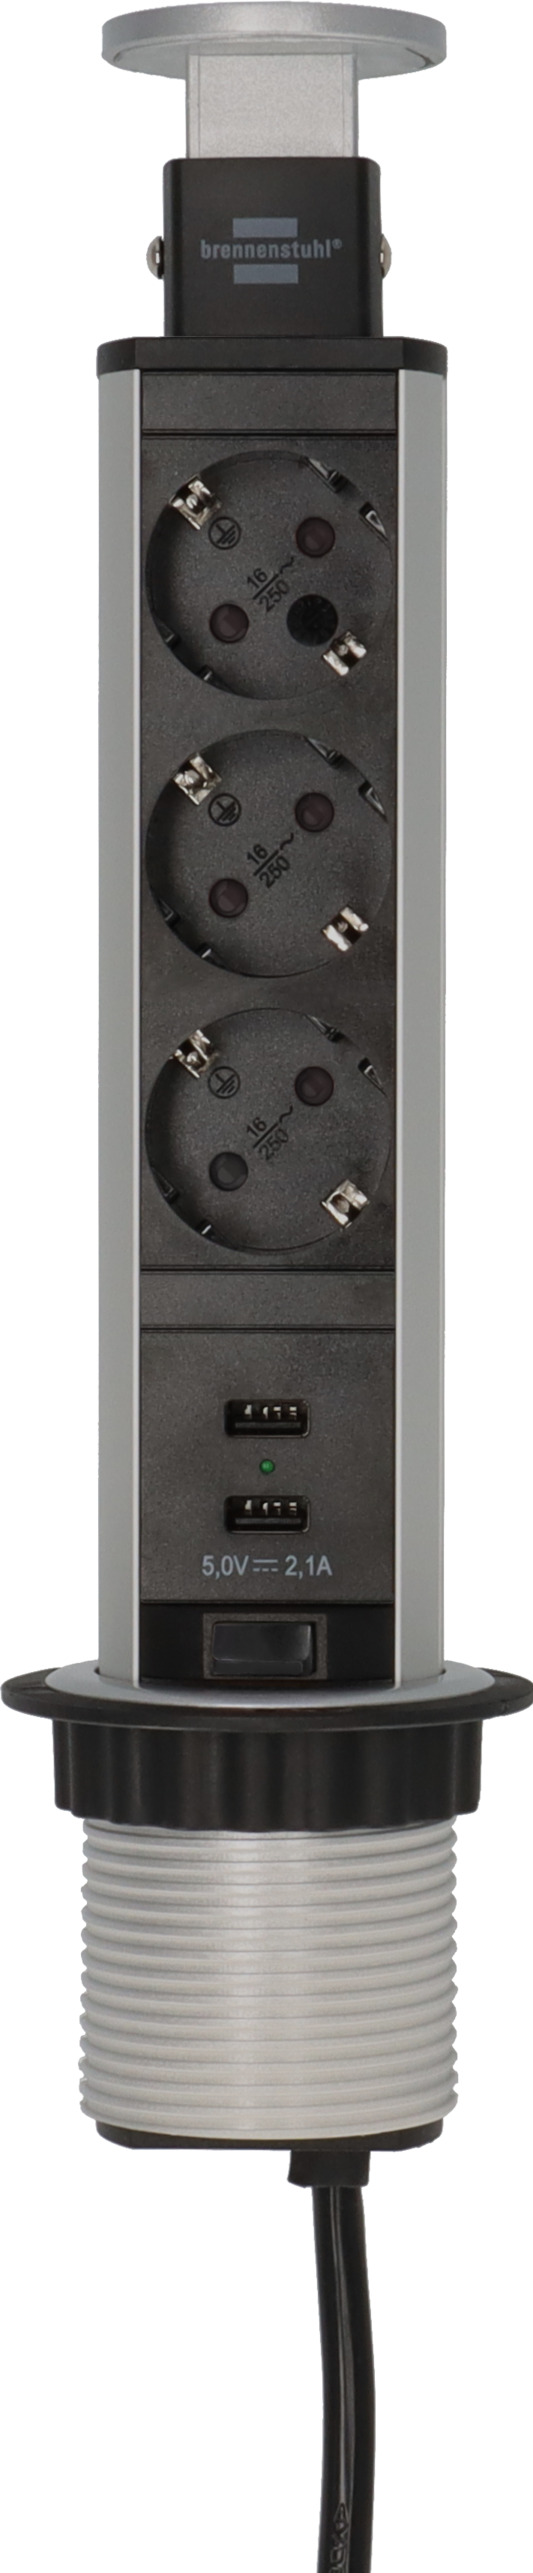 Tower Power Chargeur USB Prise LAN/table, 3-gang Brennenstuhl 